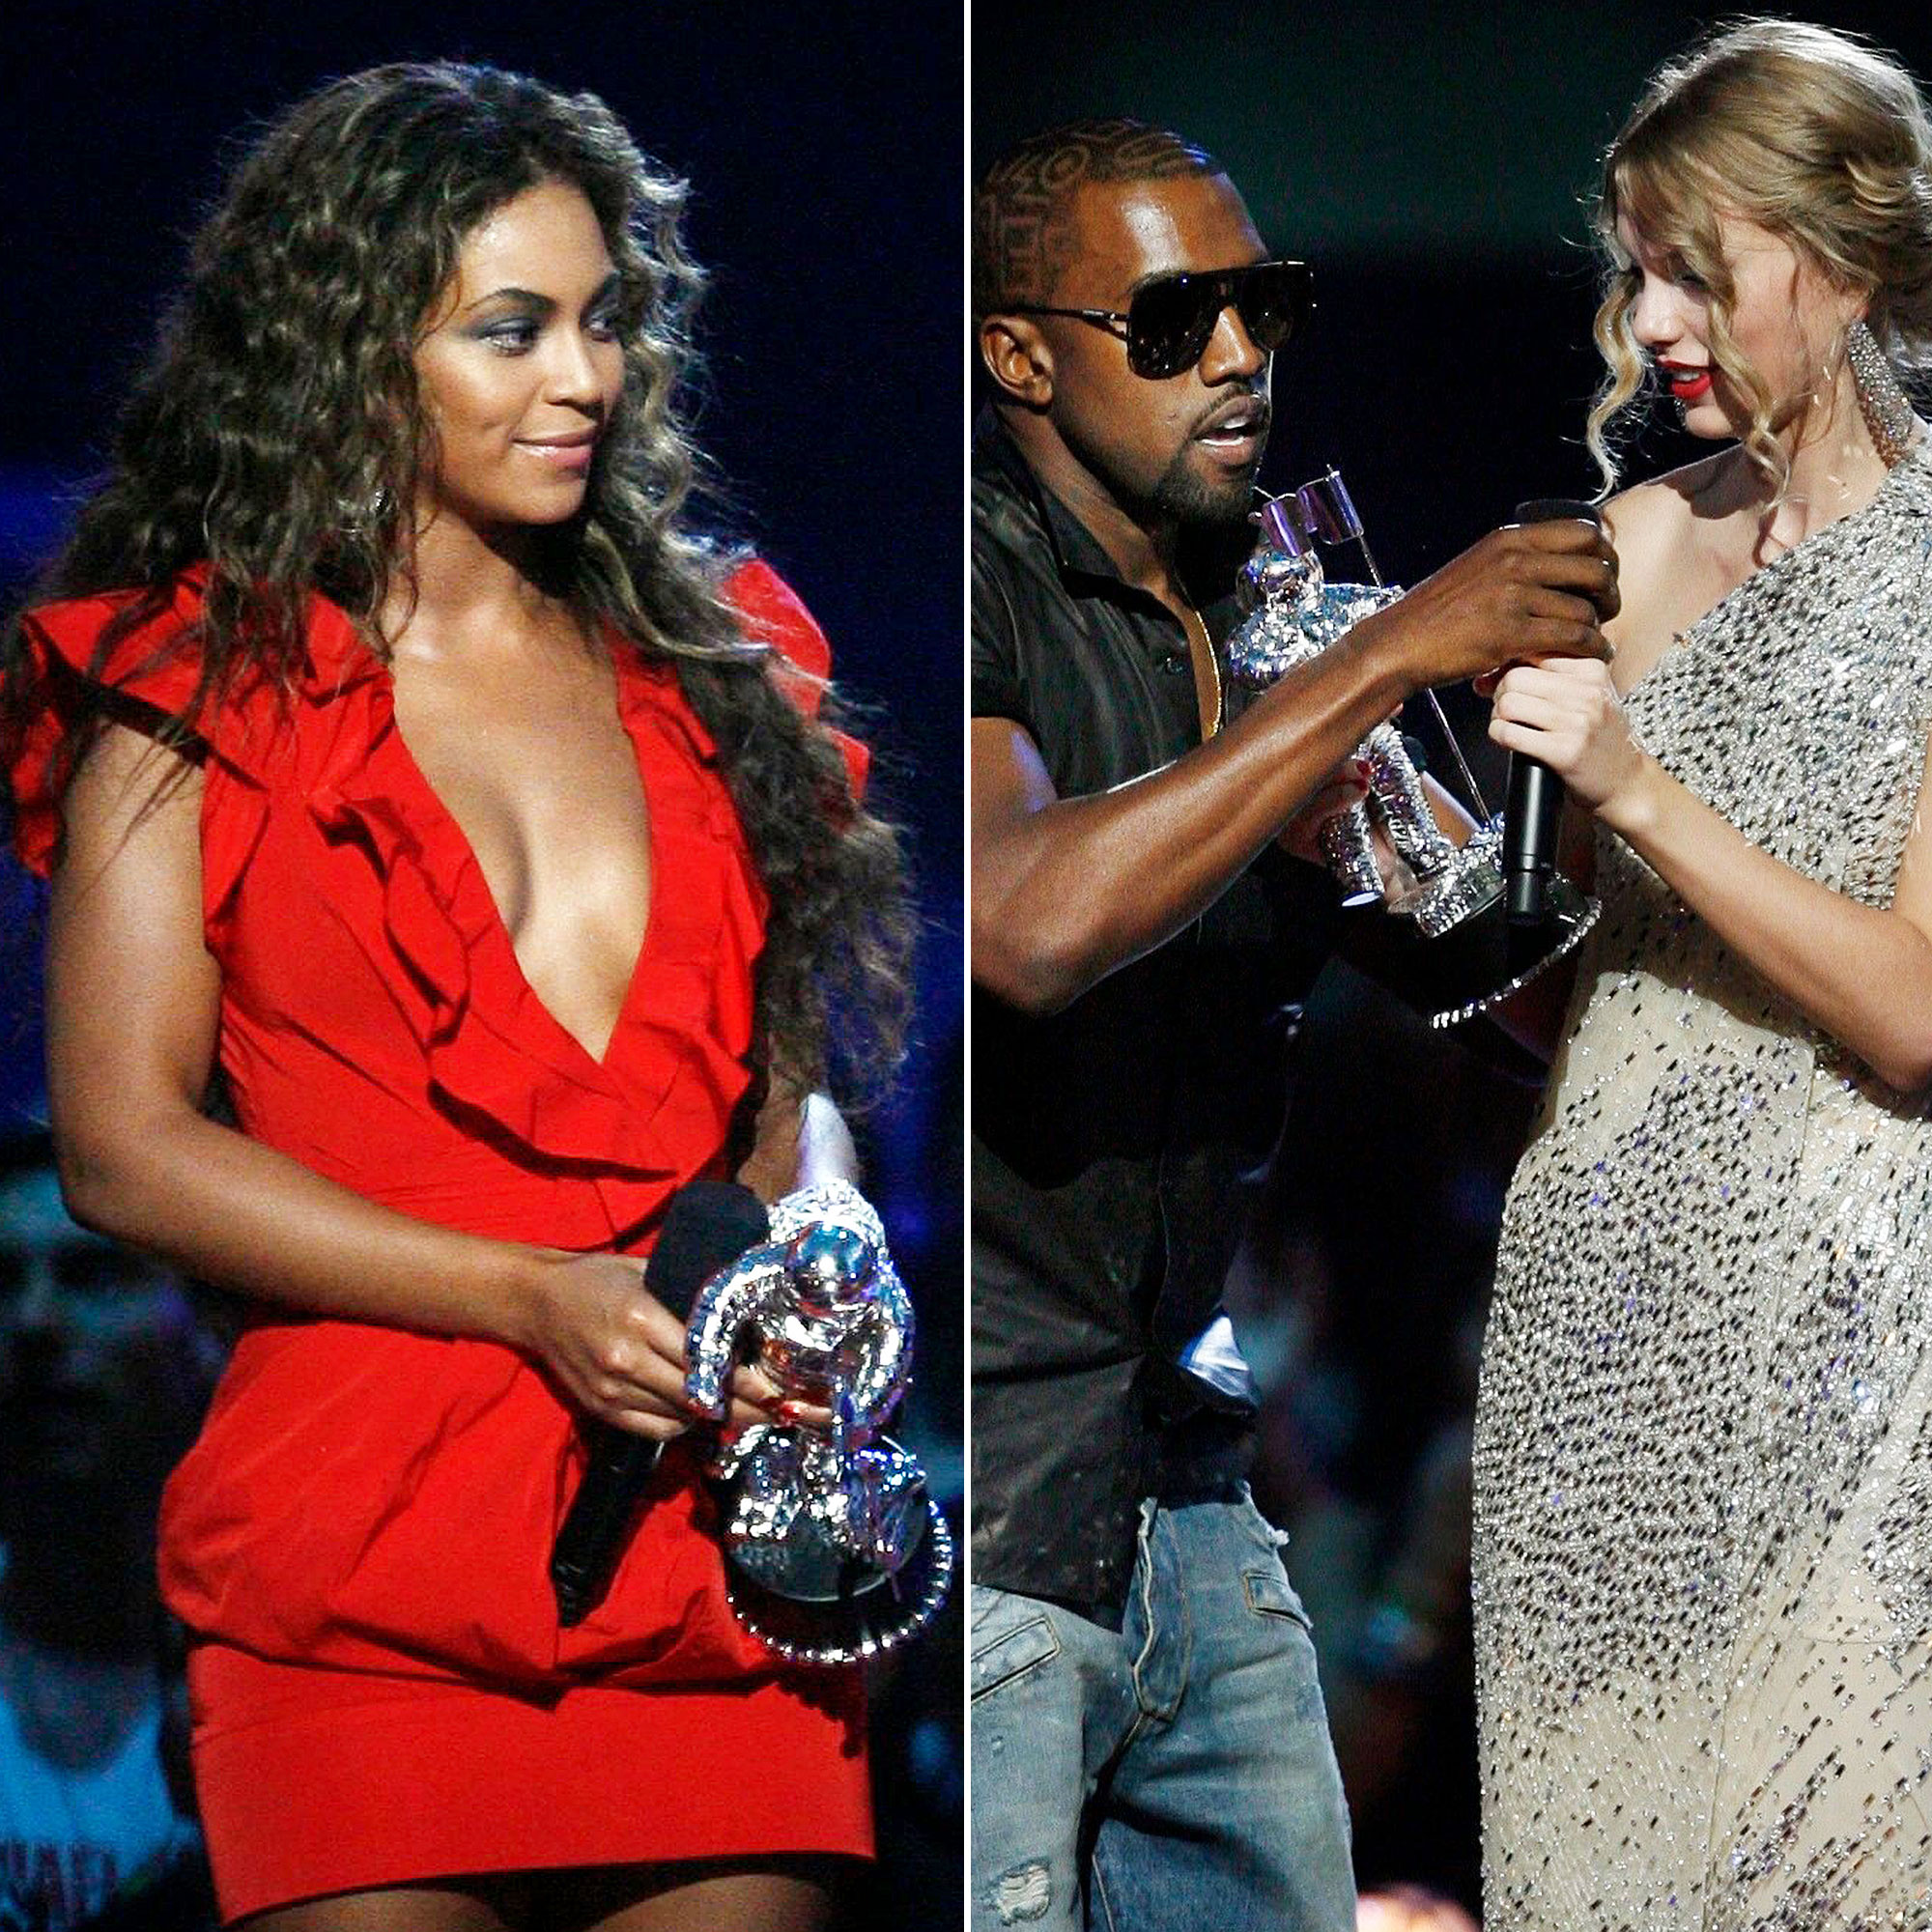 Тейлор уэст. Kanye West MTV VMA 2009. Бейонсе и Канье Уэст. Канье Уэст и Тейлор Свифт 2009. Канье и Тейлор Свифт.